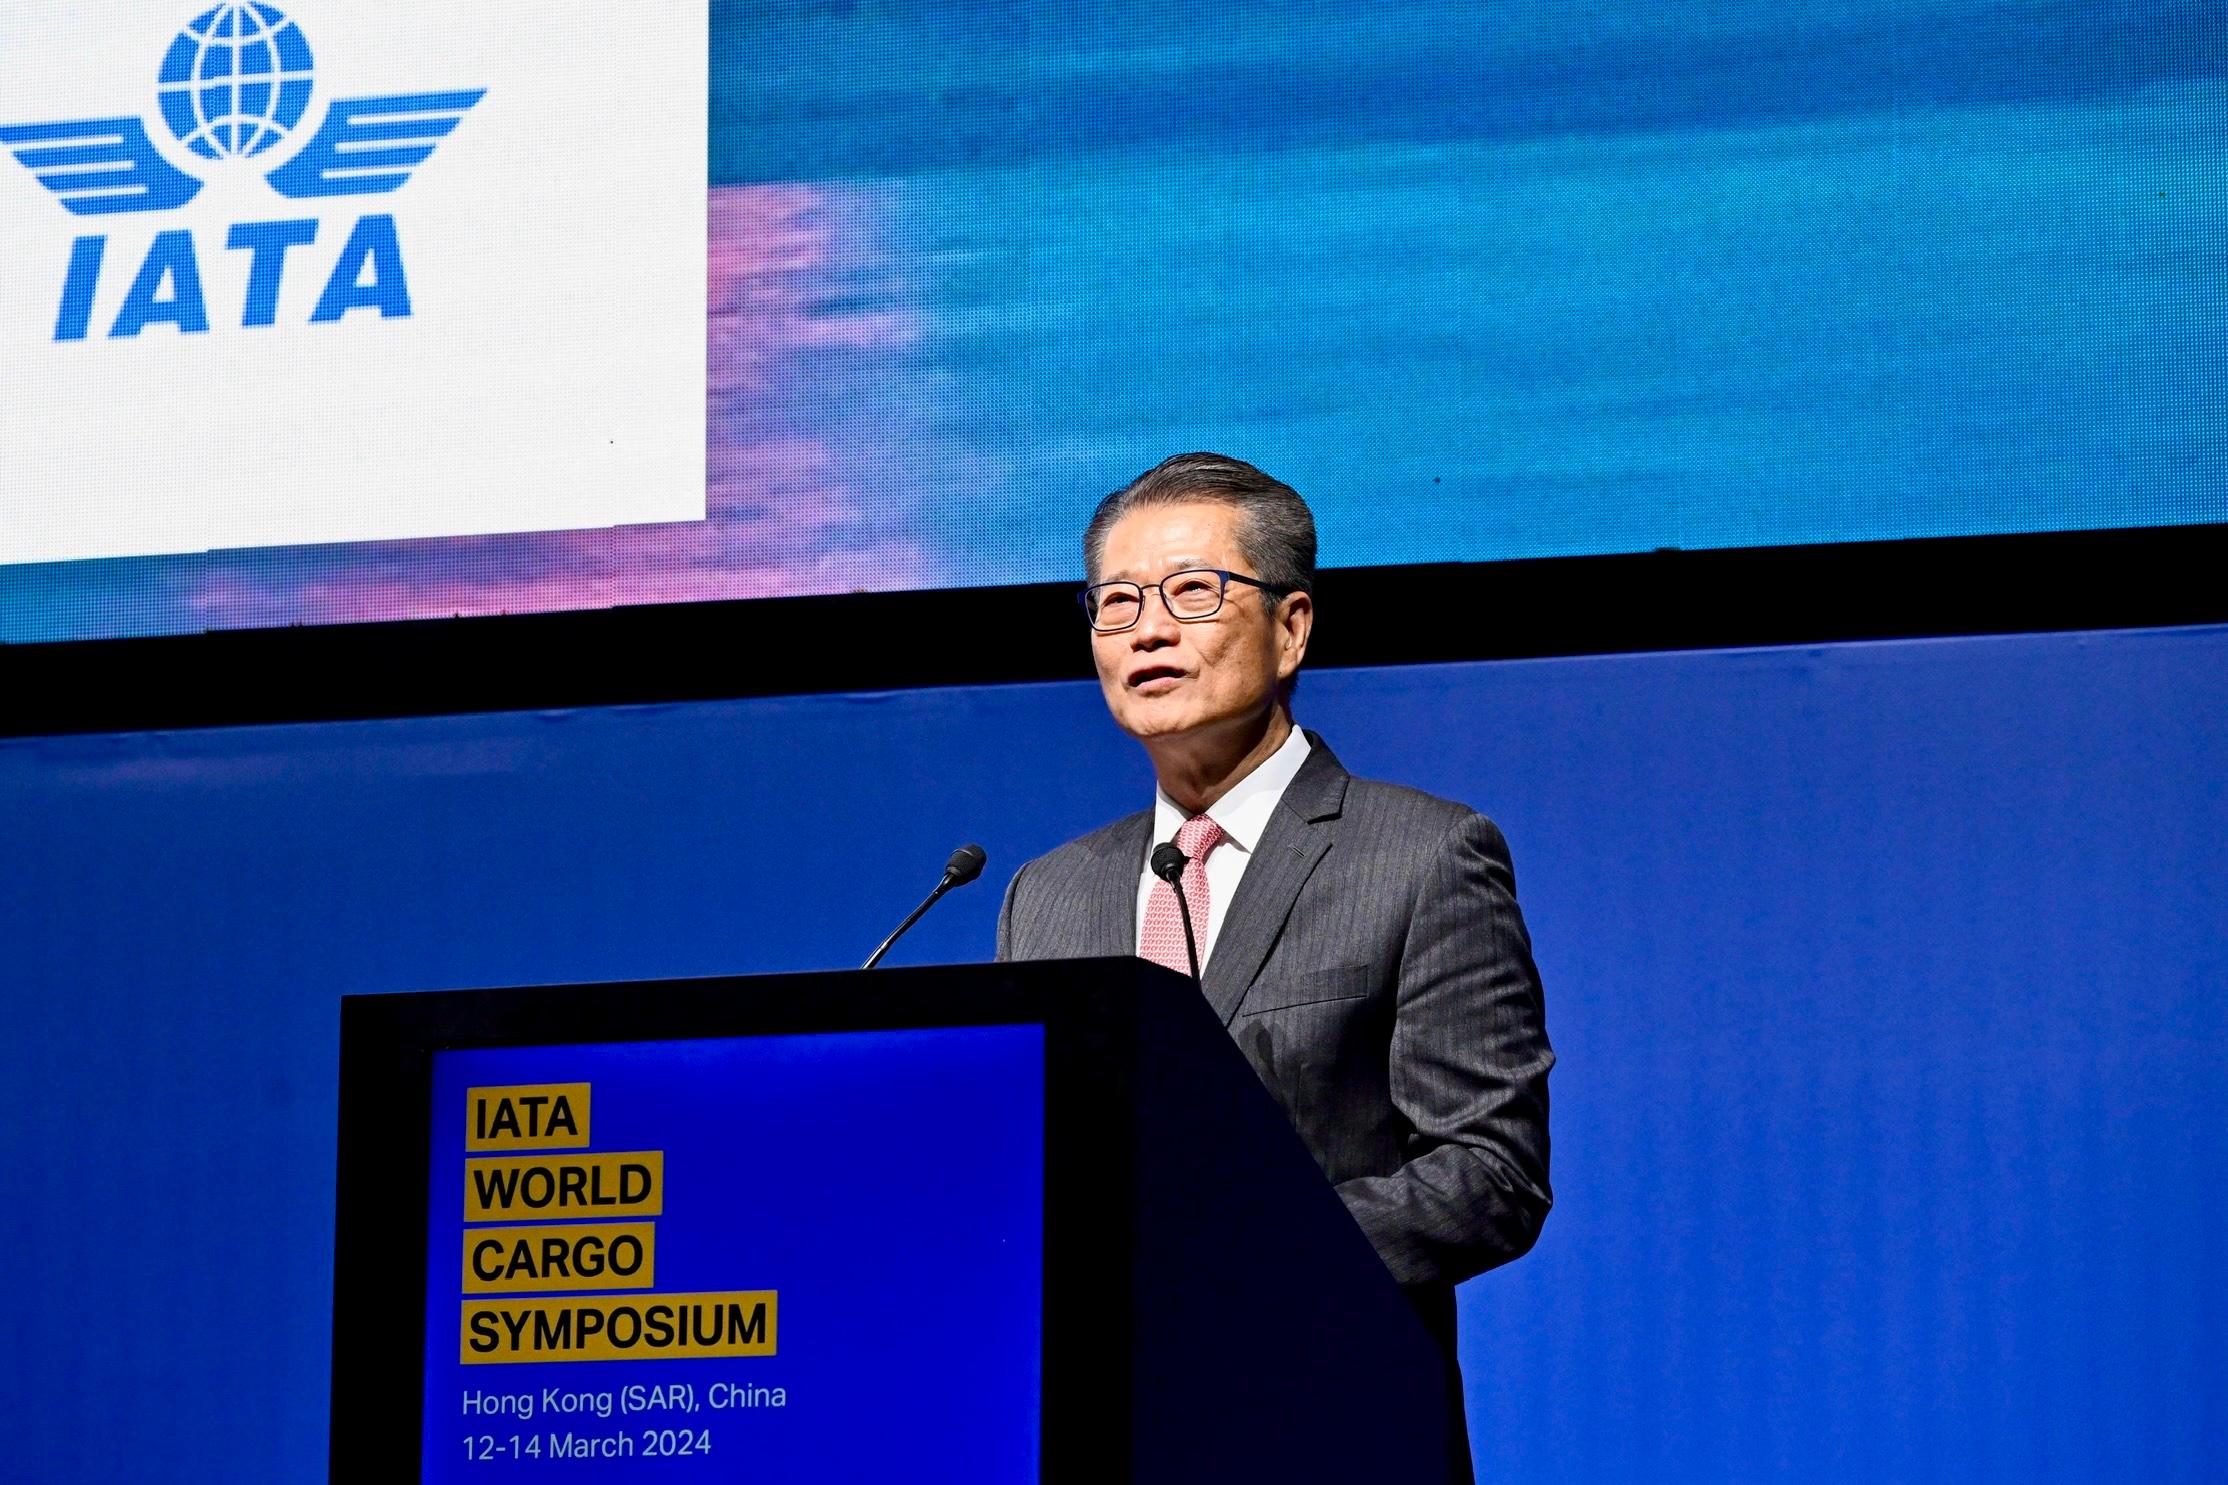 The Financial Secretary, Mr Paul Chan, speaks at the International Air Transport Association (IATA) World Cargo Symposium today (March 12).
